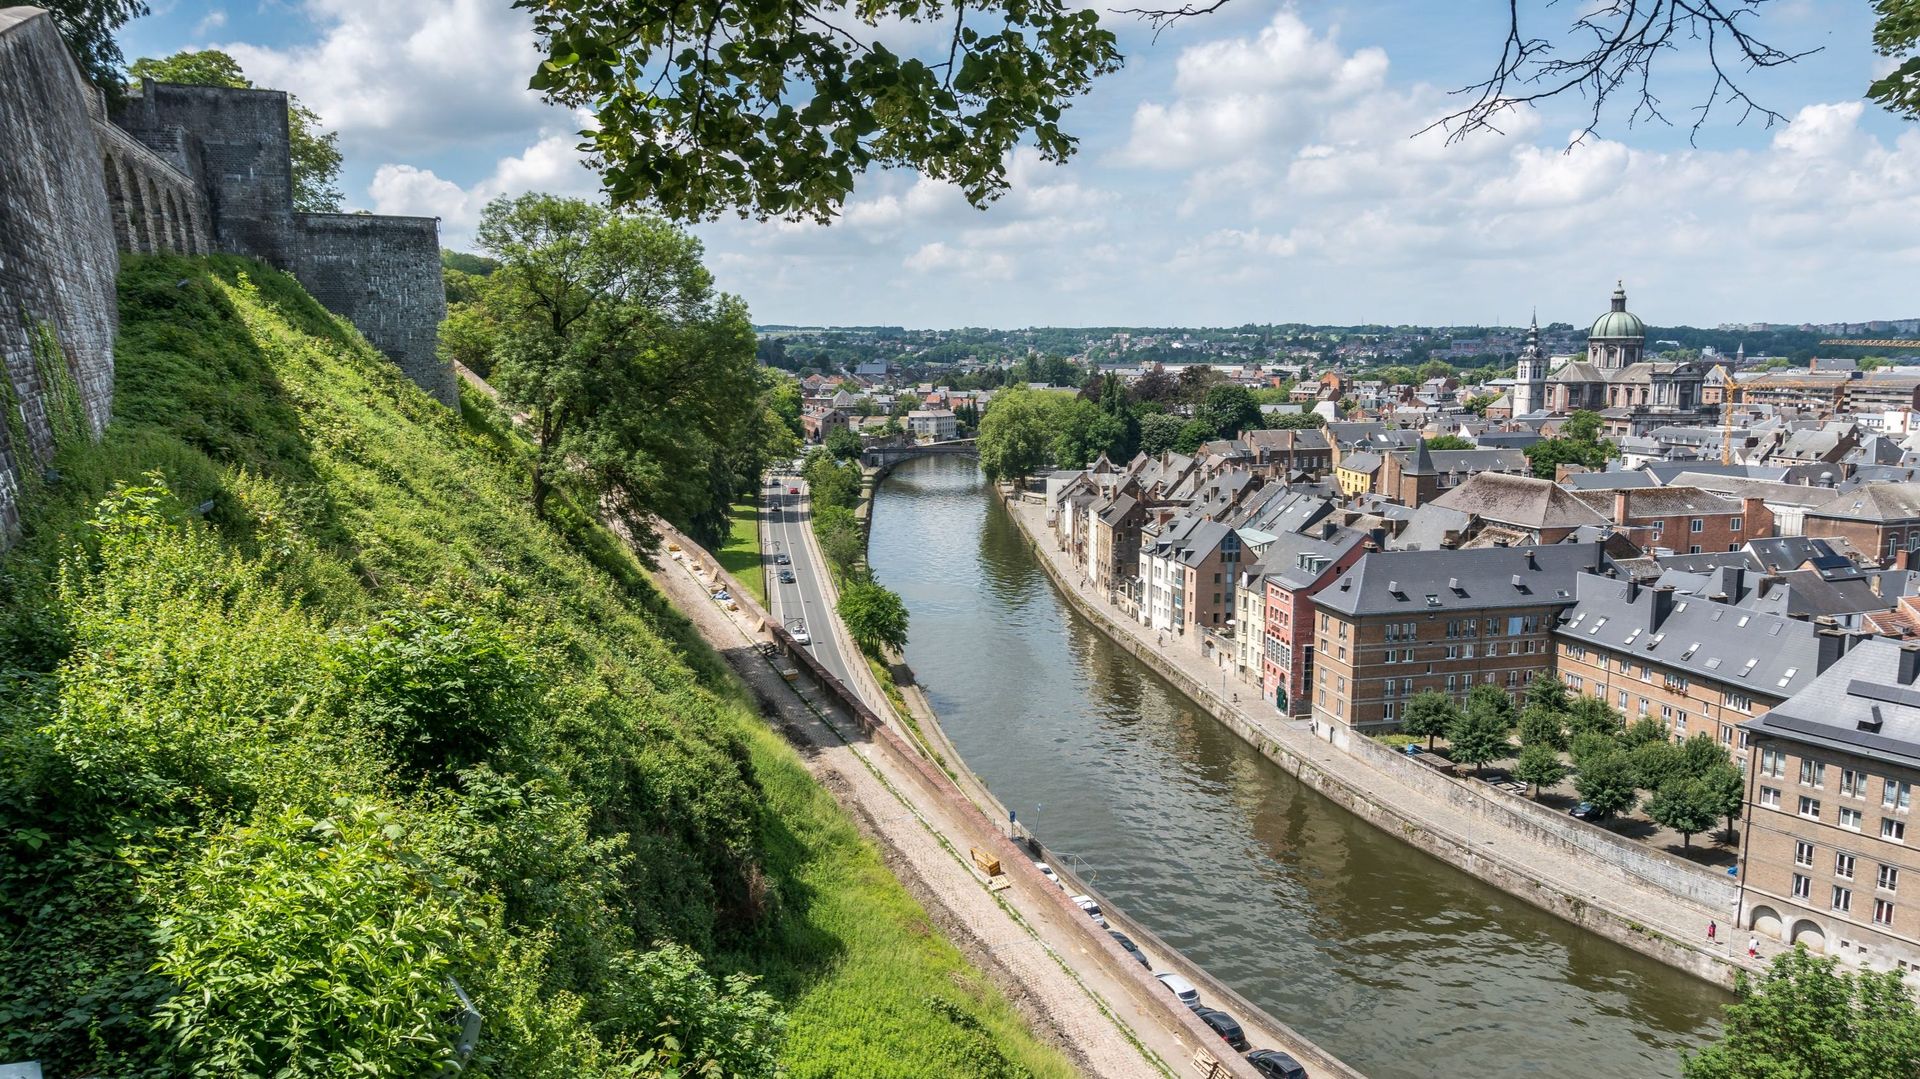 Namur city alongside the Meuse River